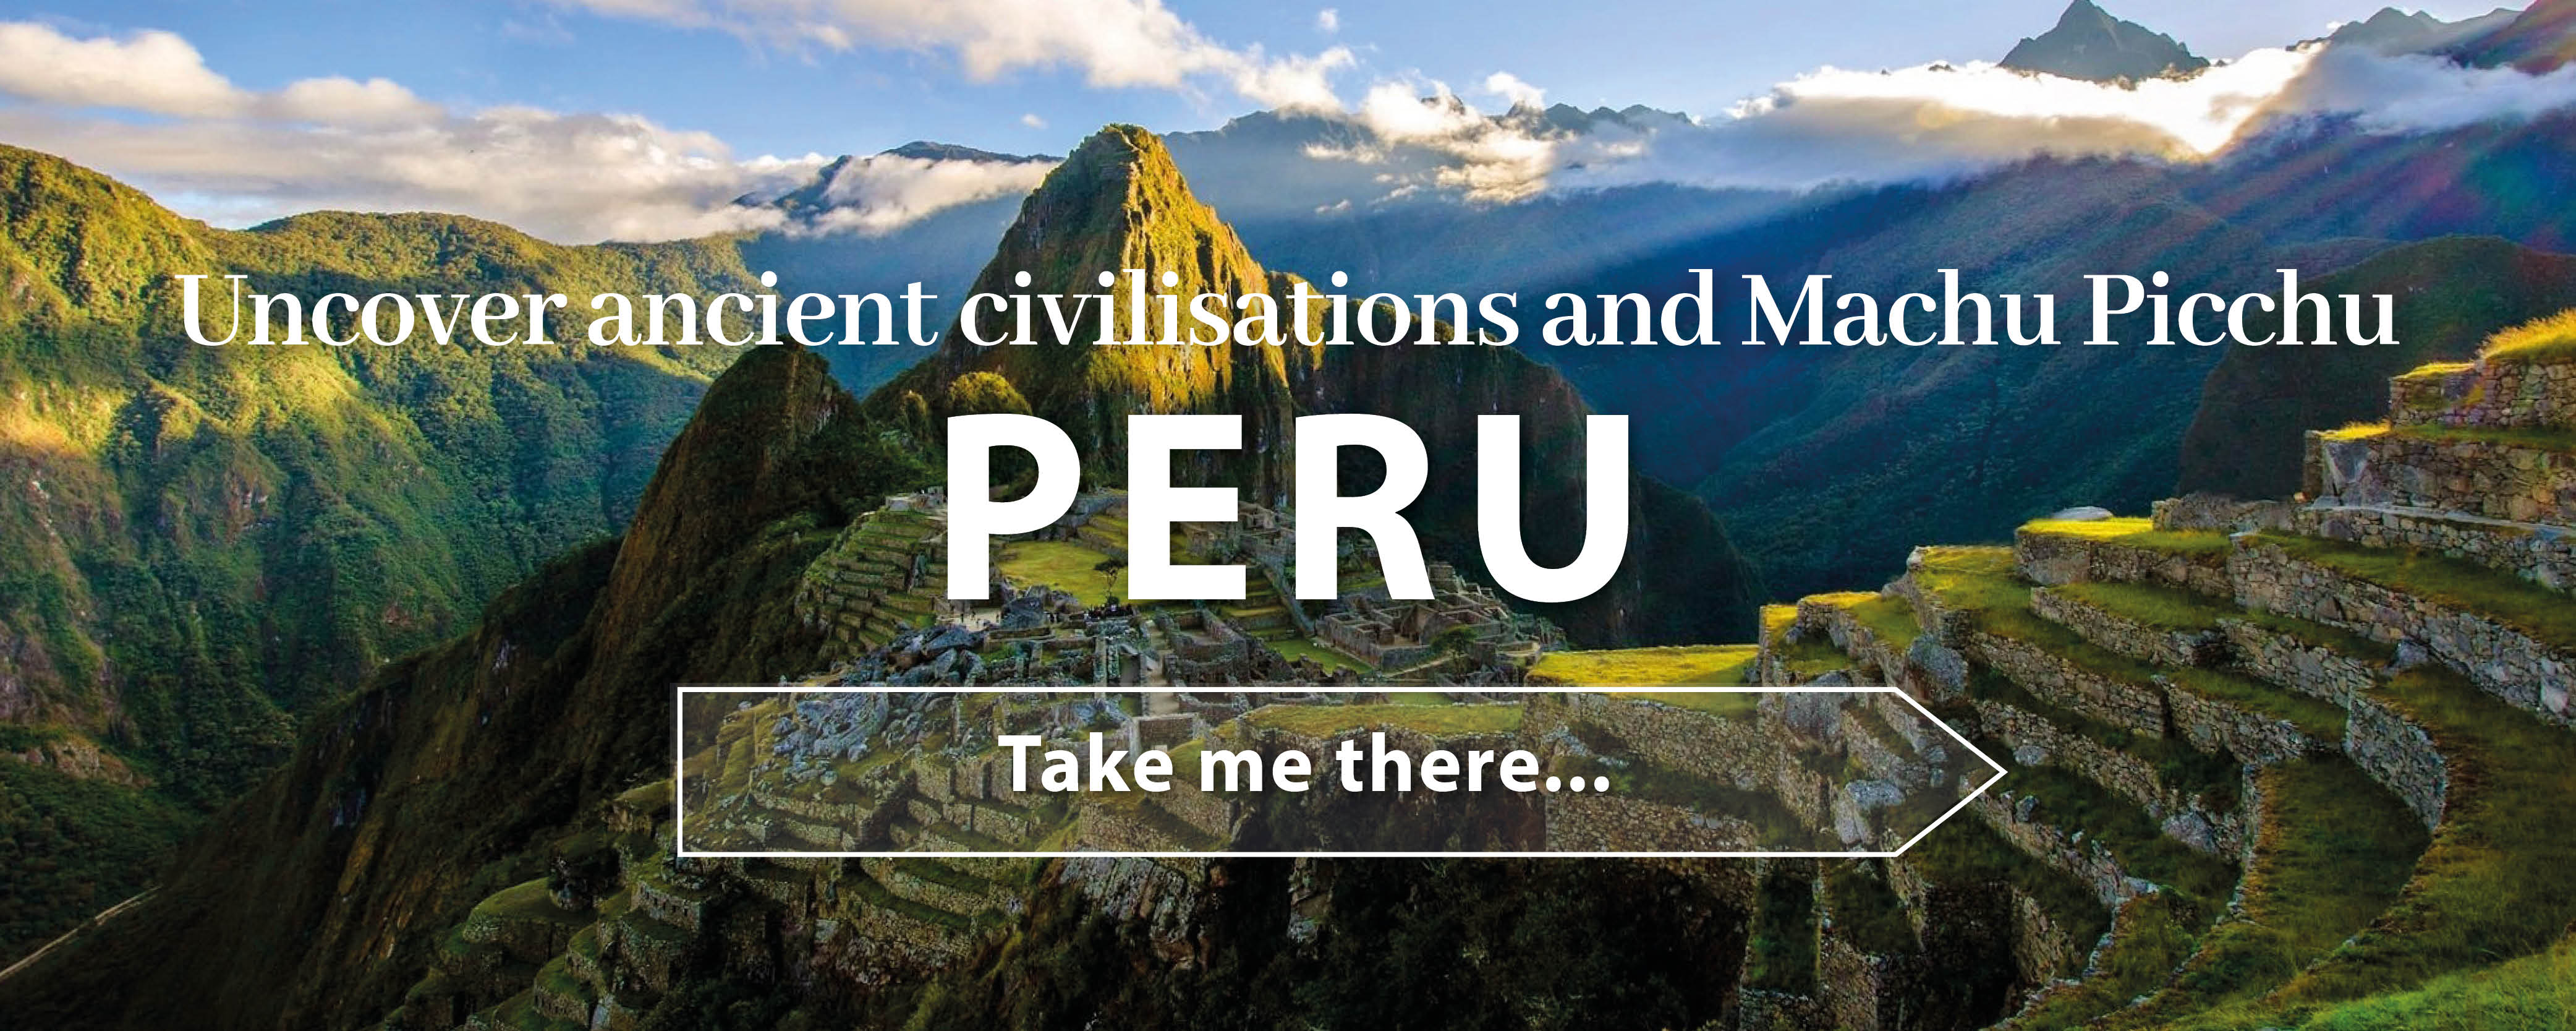 test free travel destinations Peru